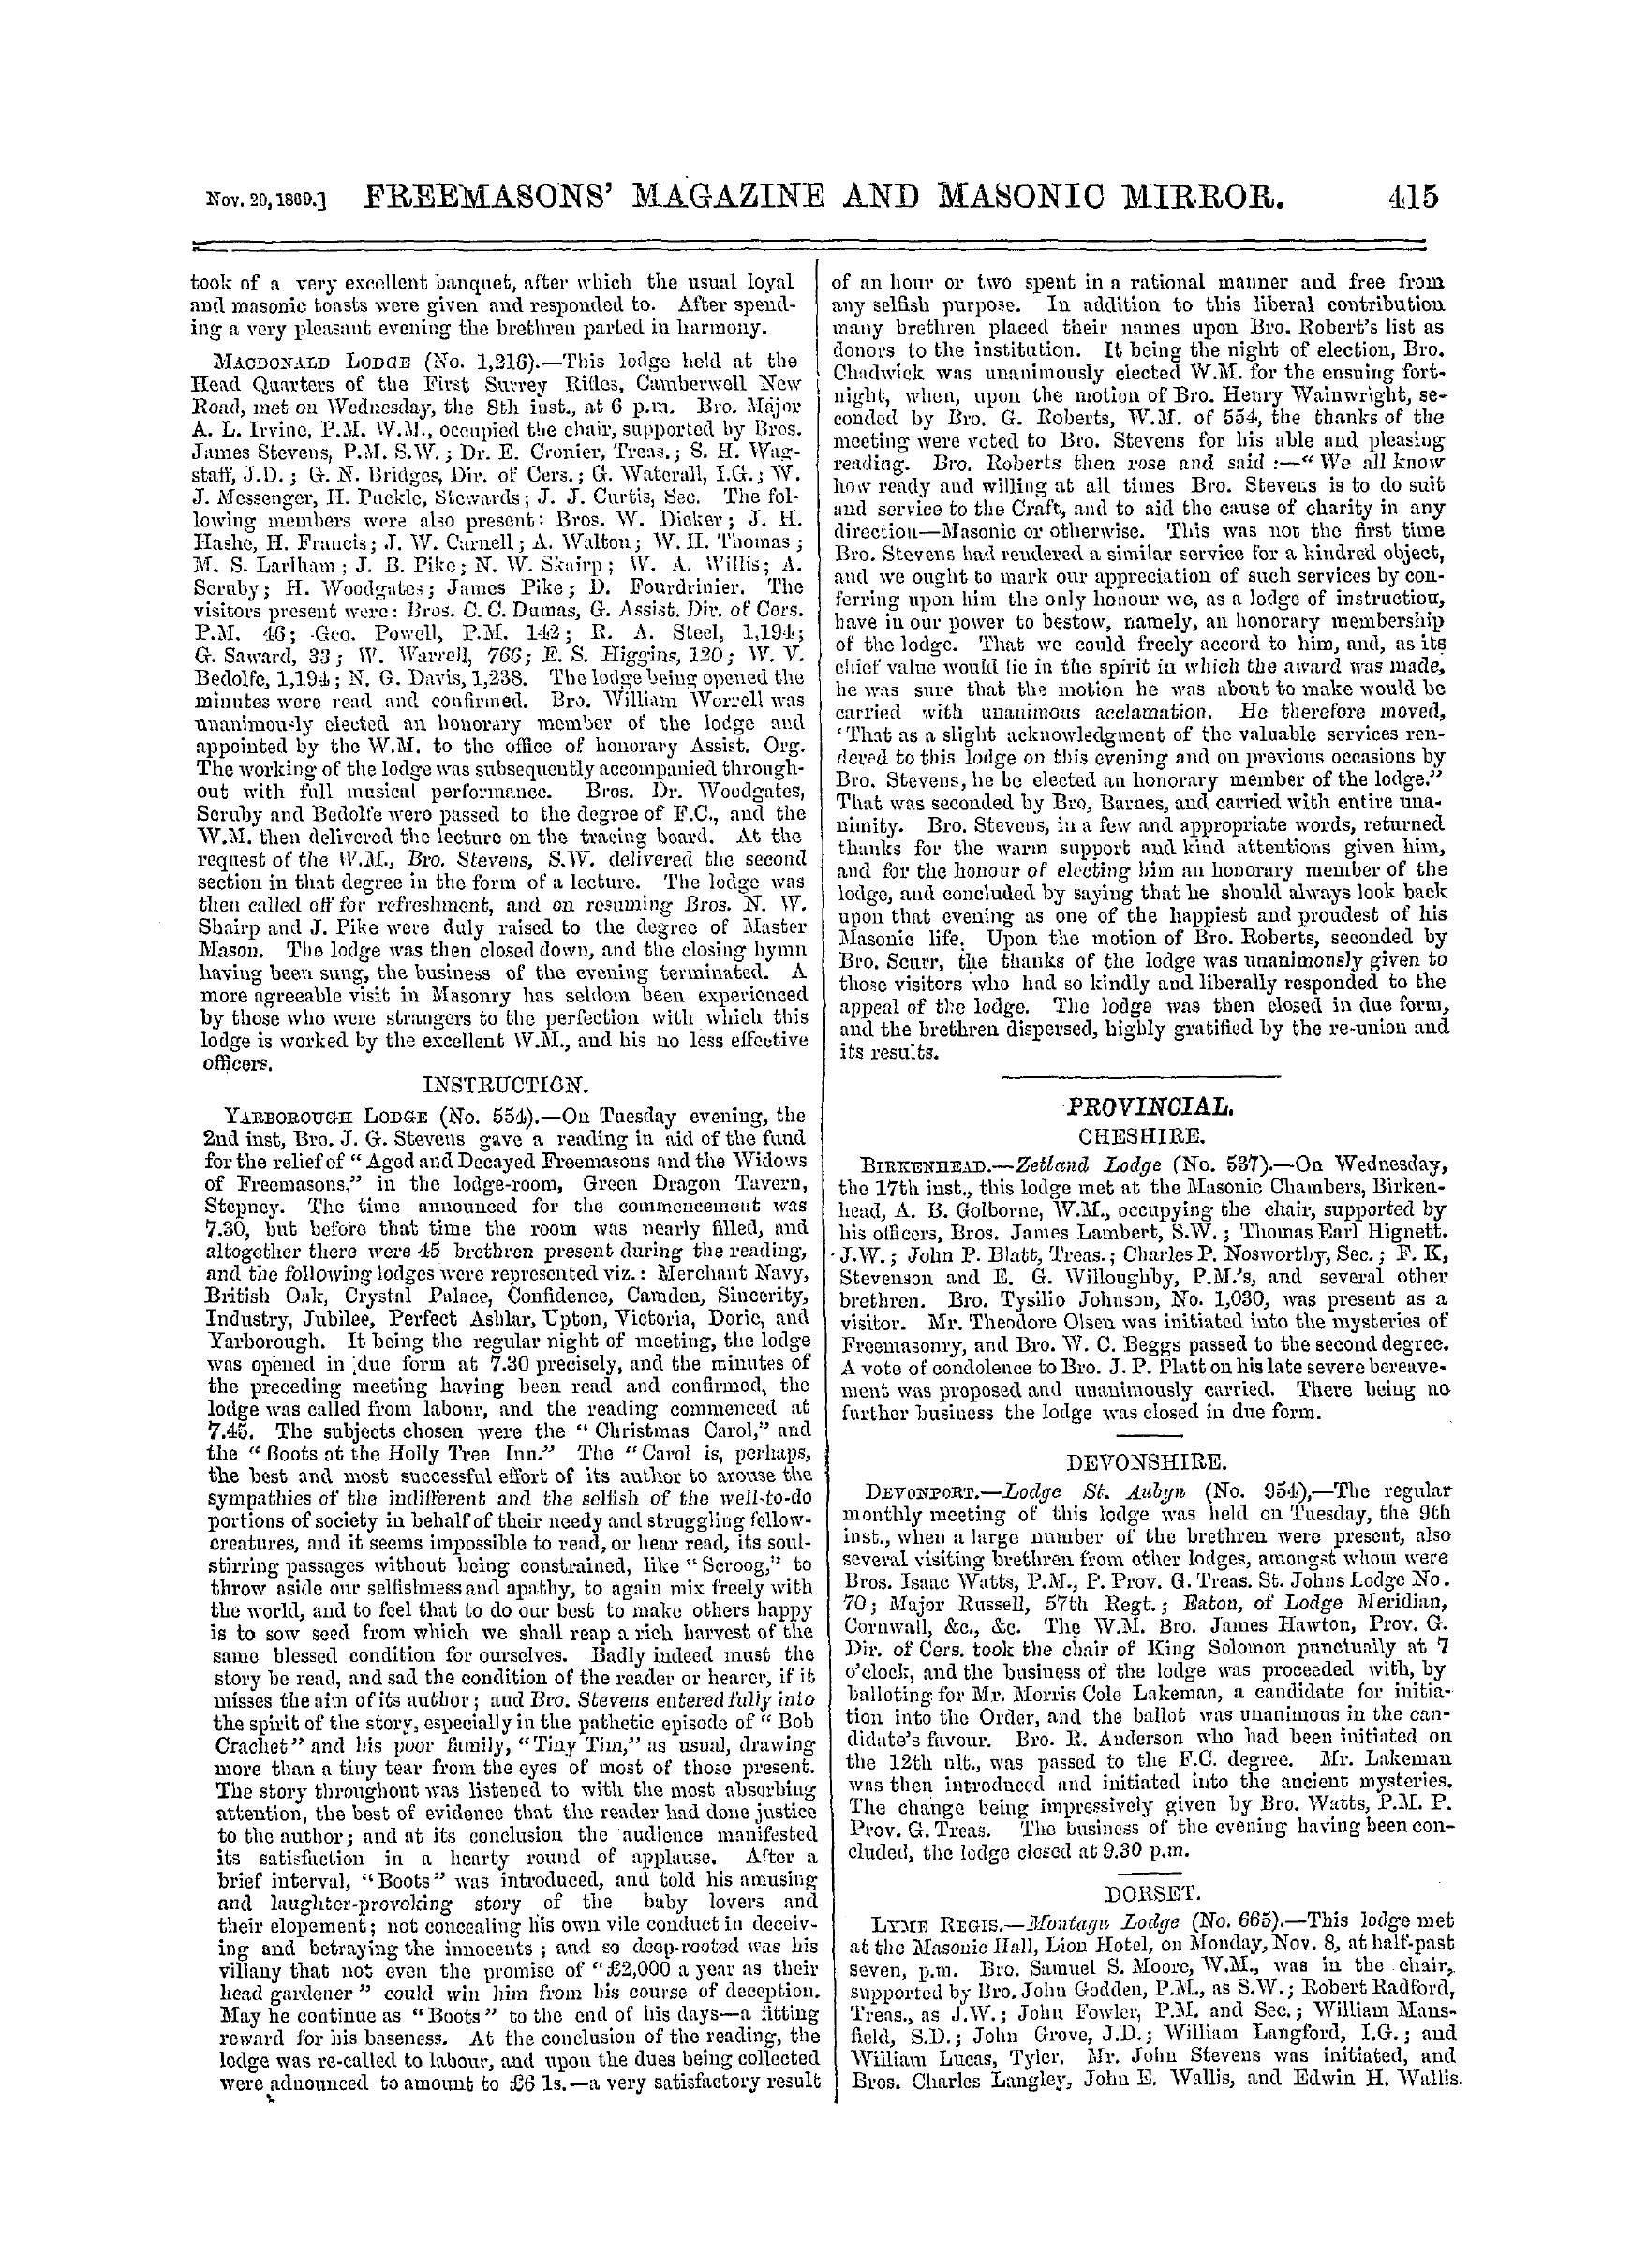 The Freemasons' Monthly Magazine: 1869-11-20 - Craft Masonry.